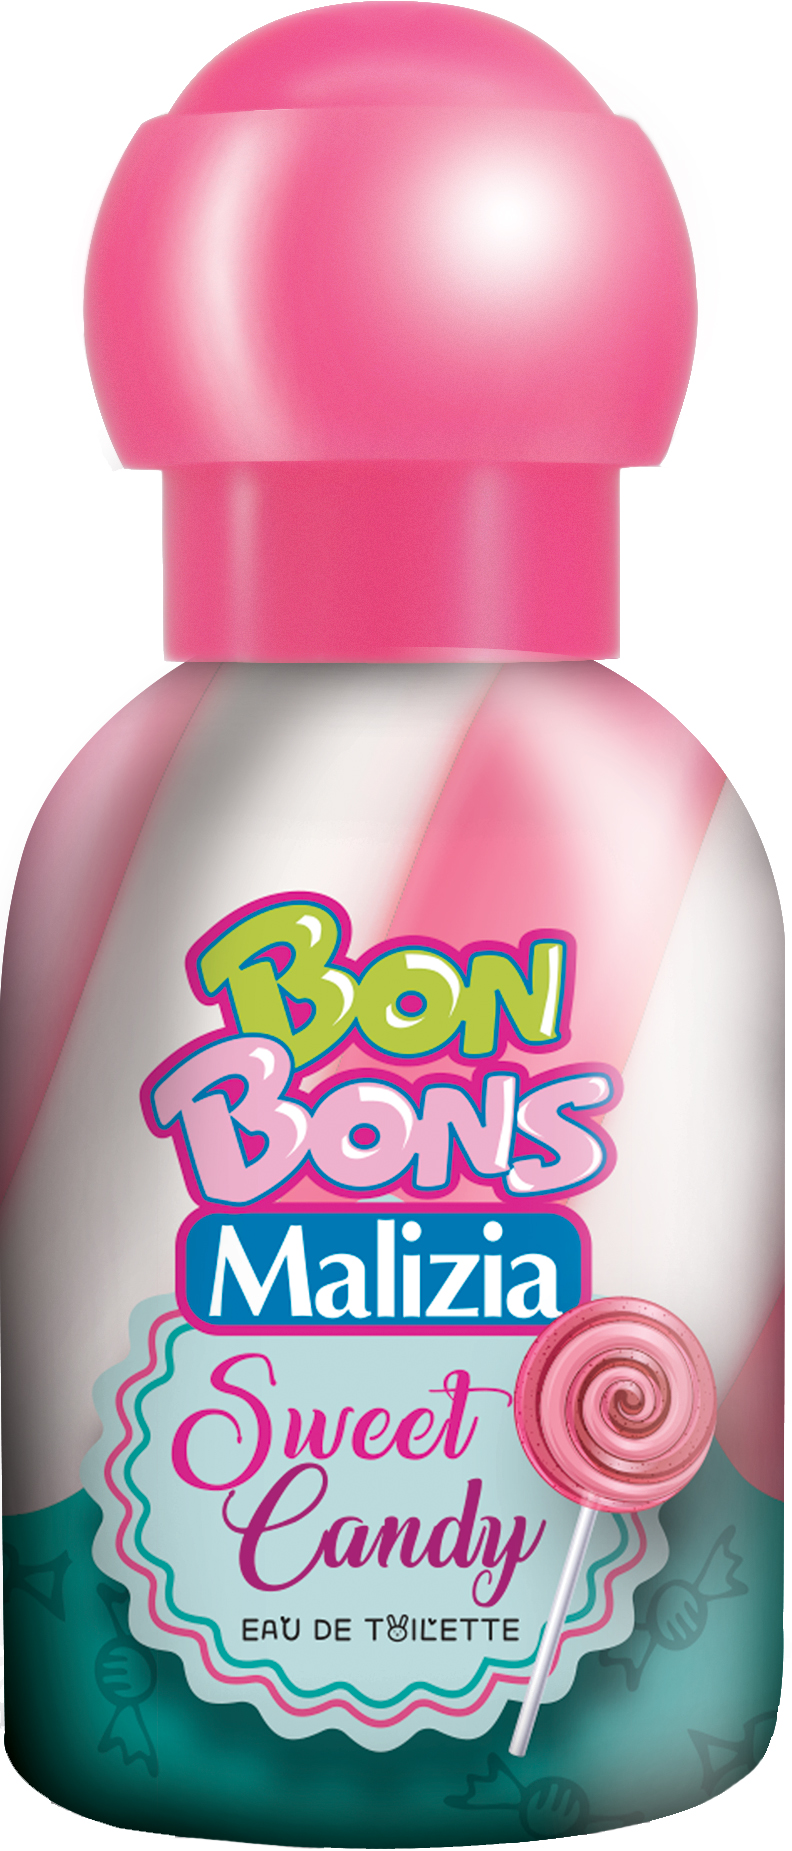 Malizia Bons Bons Eau de Toilette 50 ml Spray for Teens Girls